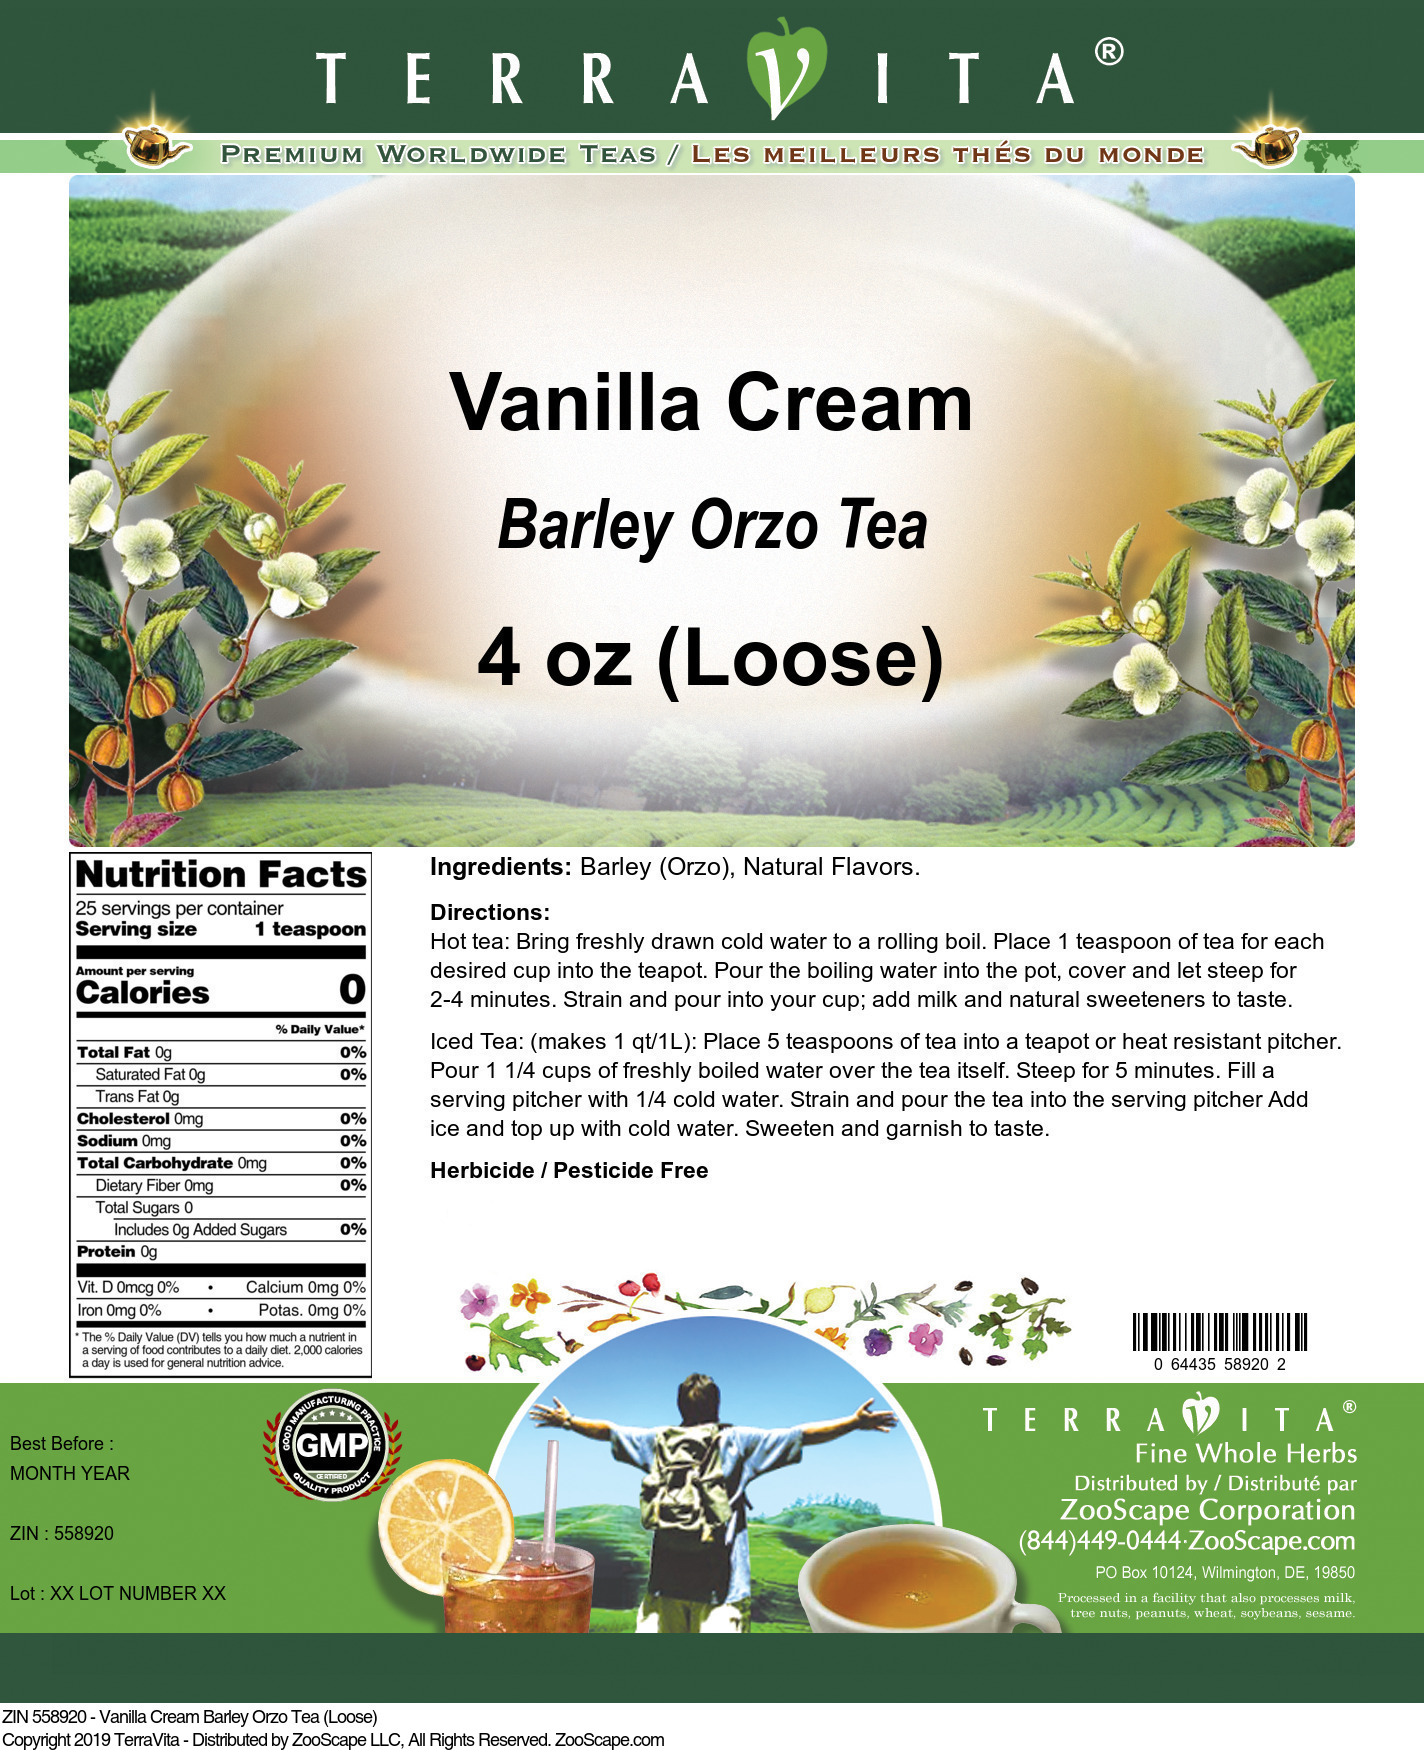 Vanilla Cream Barley Orzo Tea (Loose) - Label